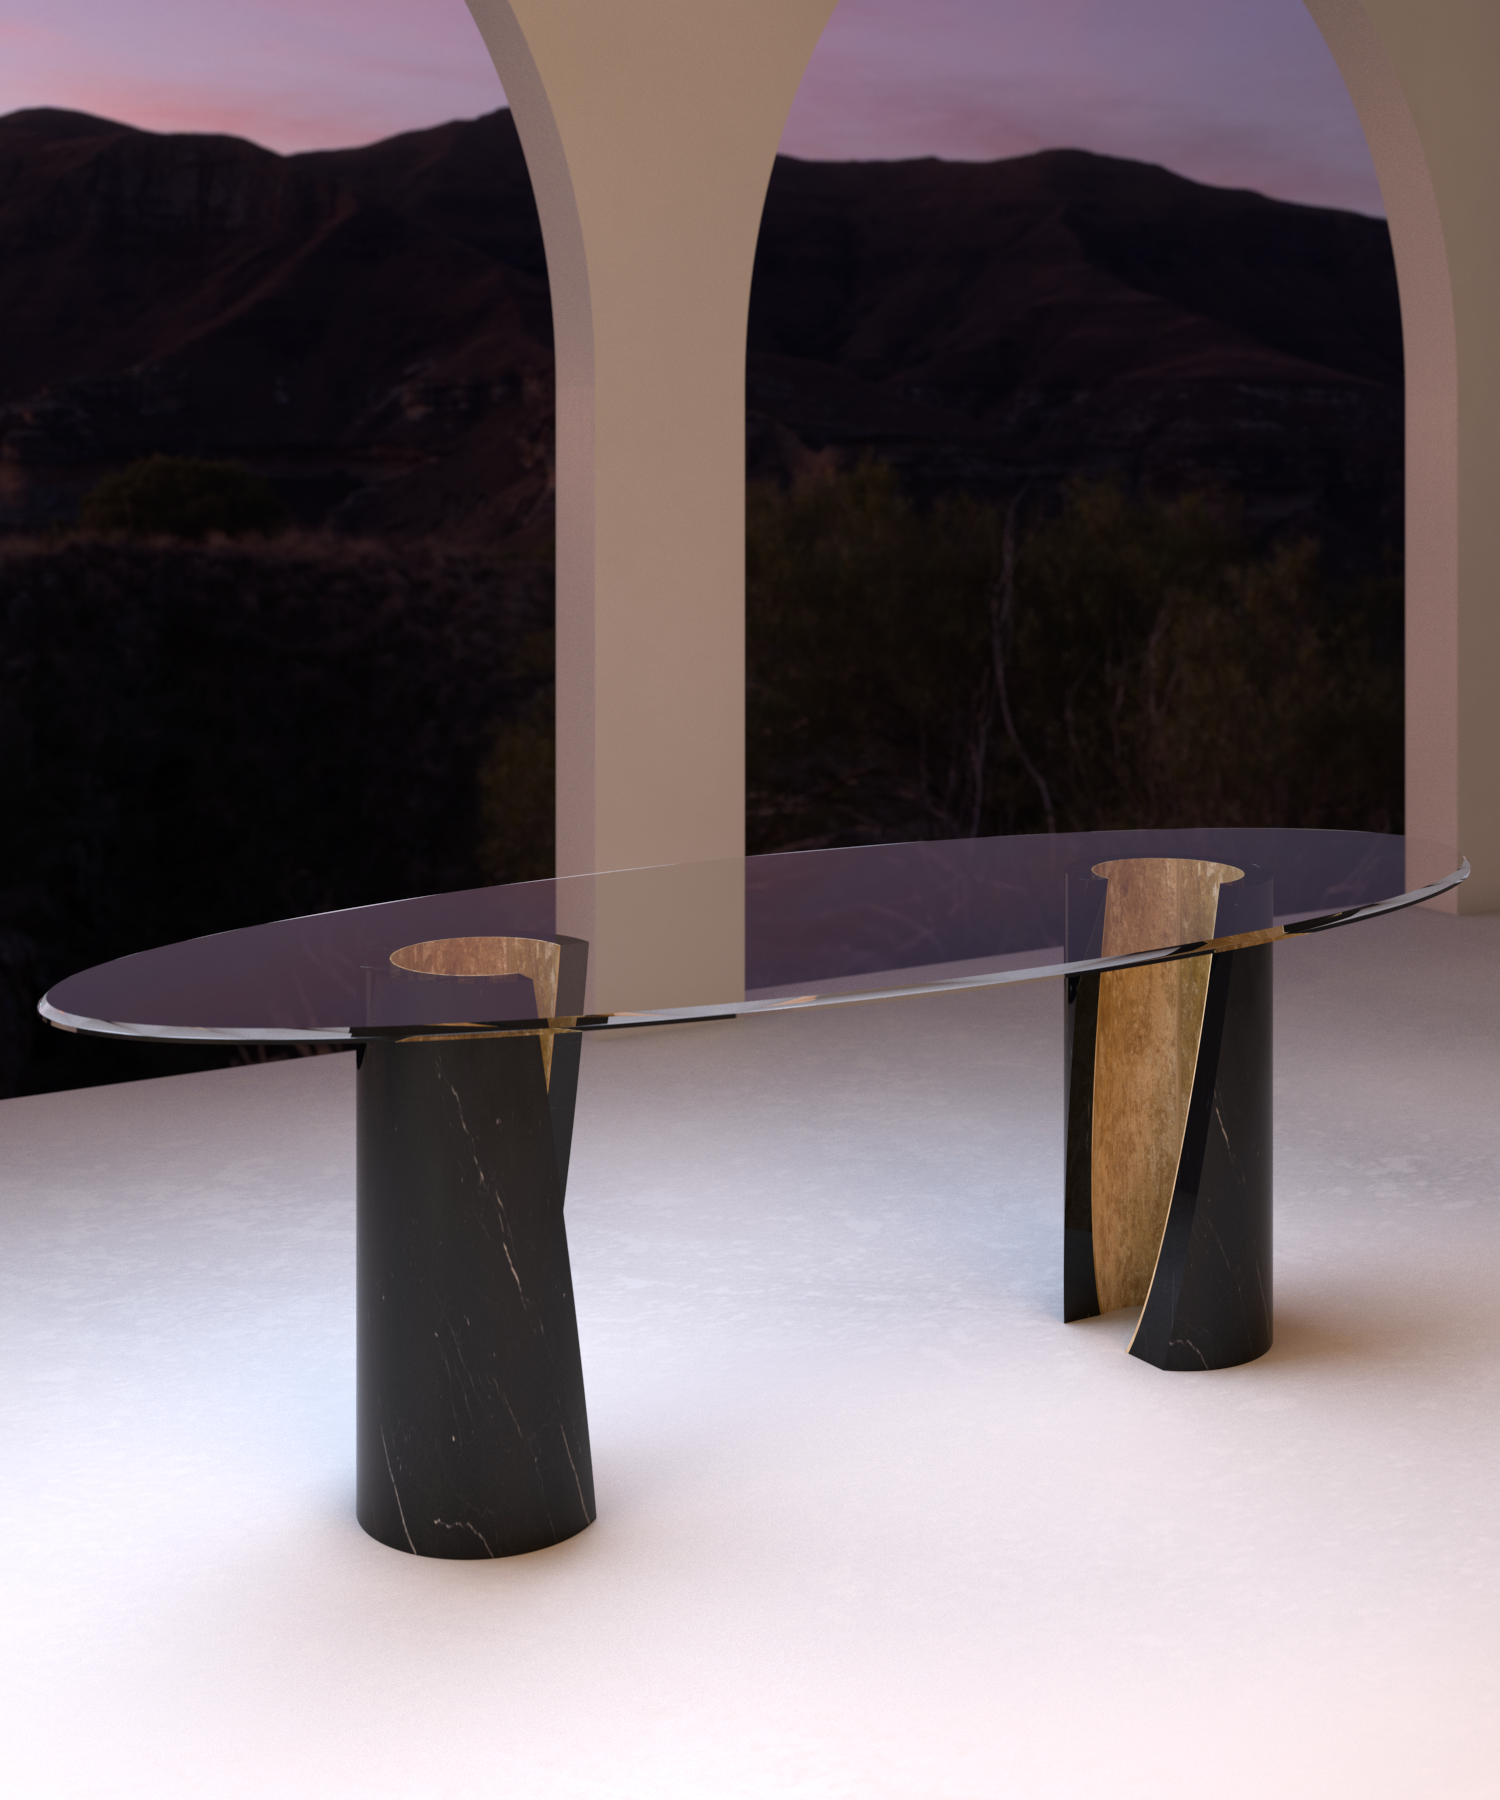 Asymmetric - Nero Marquinia Dining Table